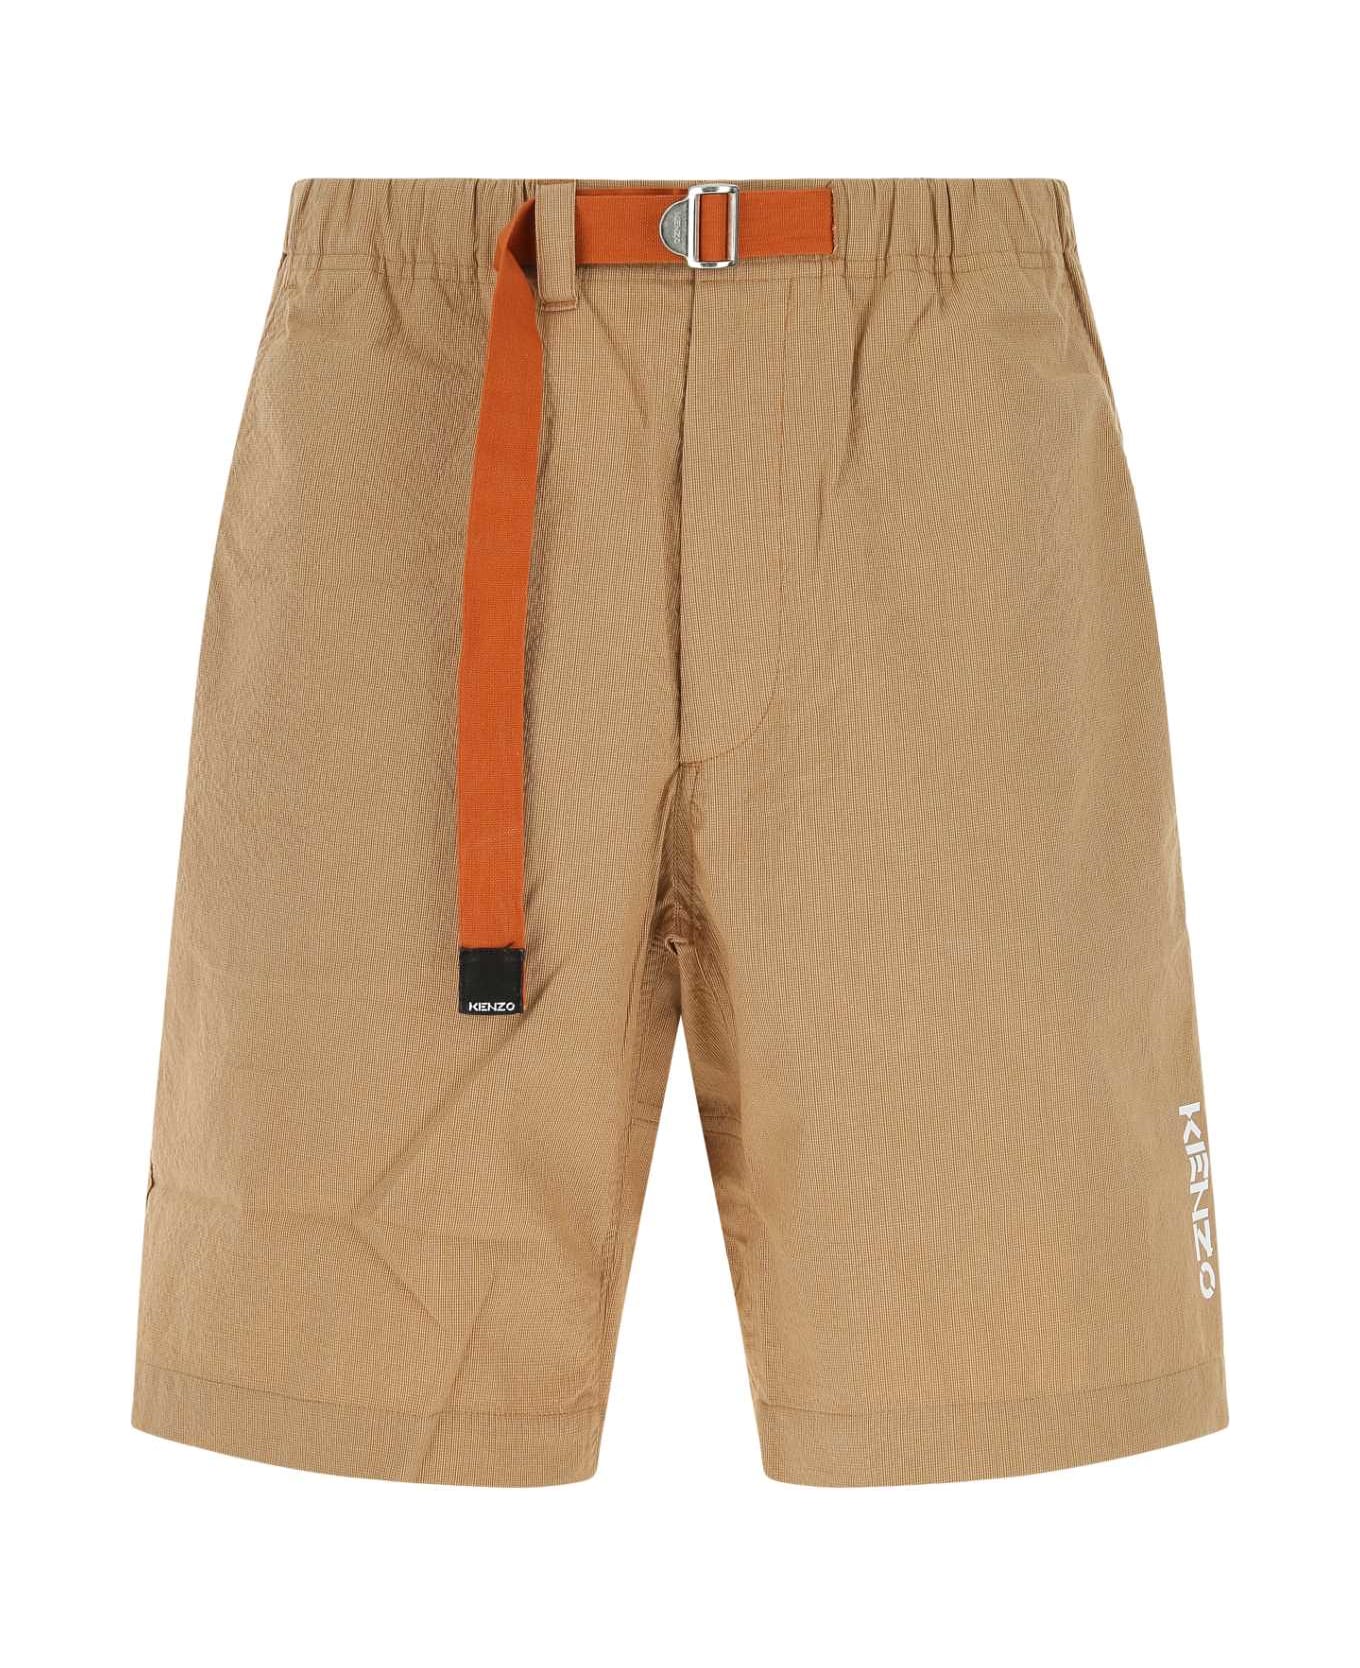 Kenzo Biscuit Cotton Bermuda Shorts - 42